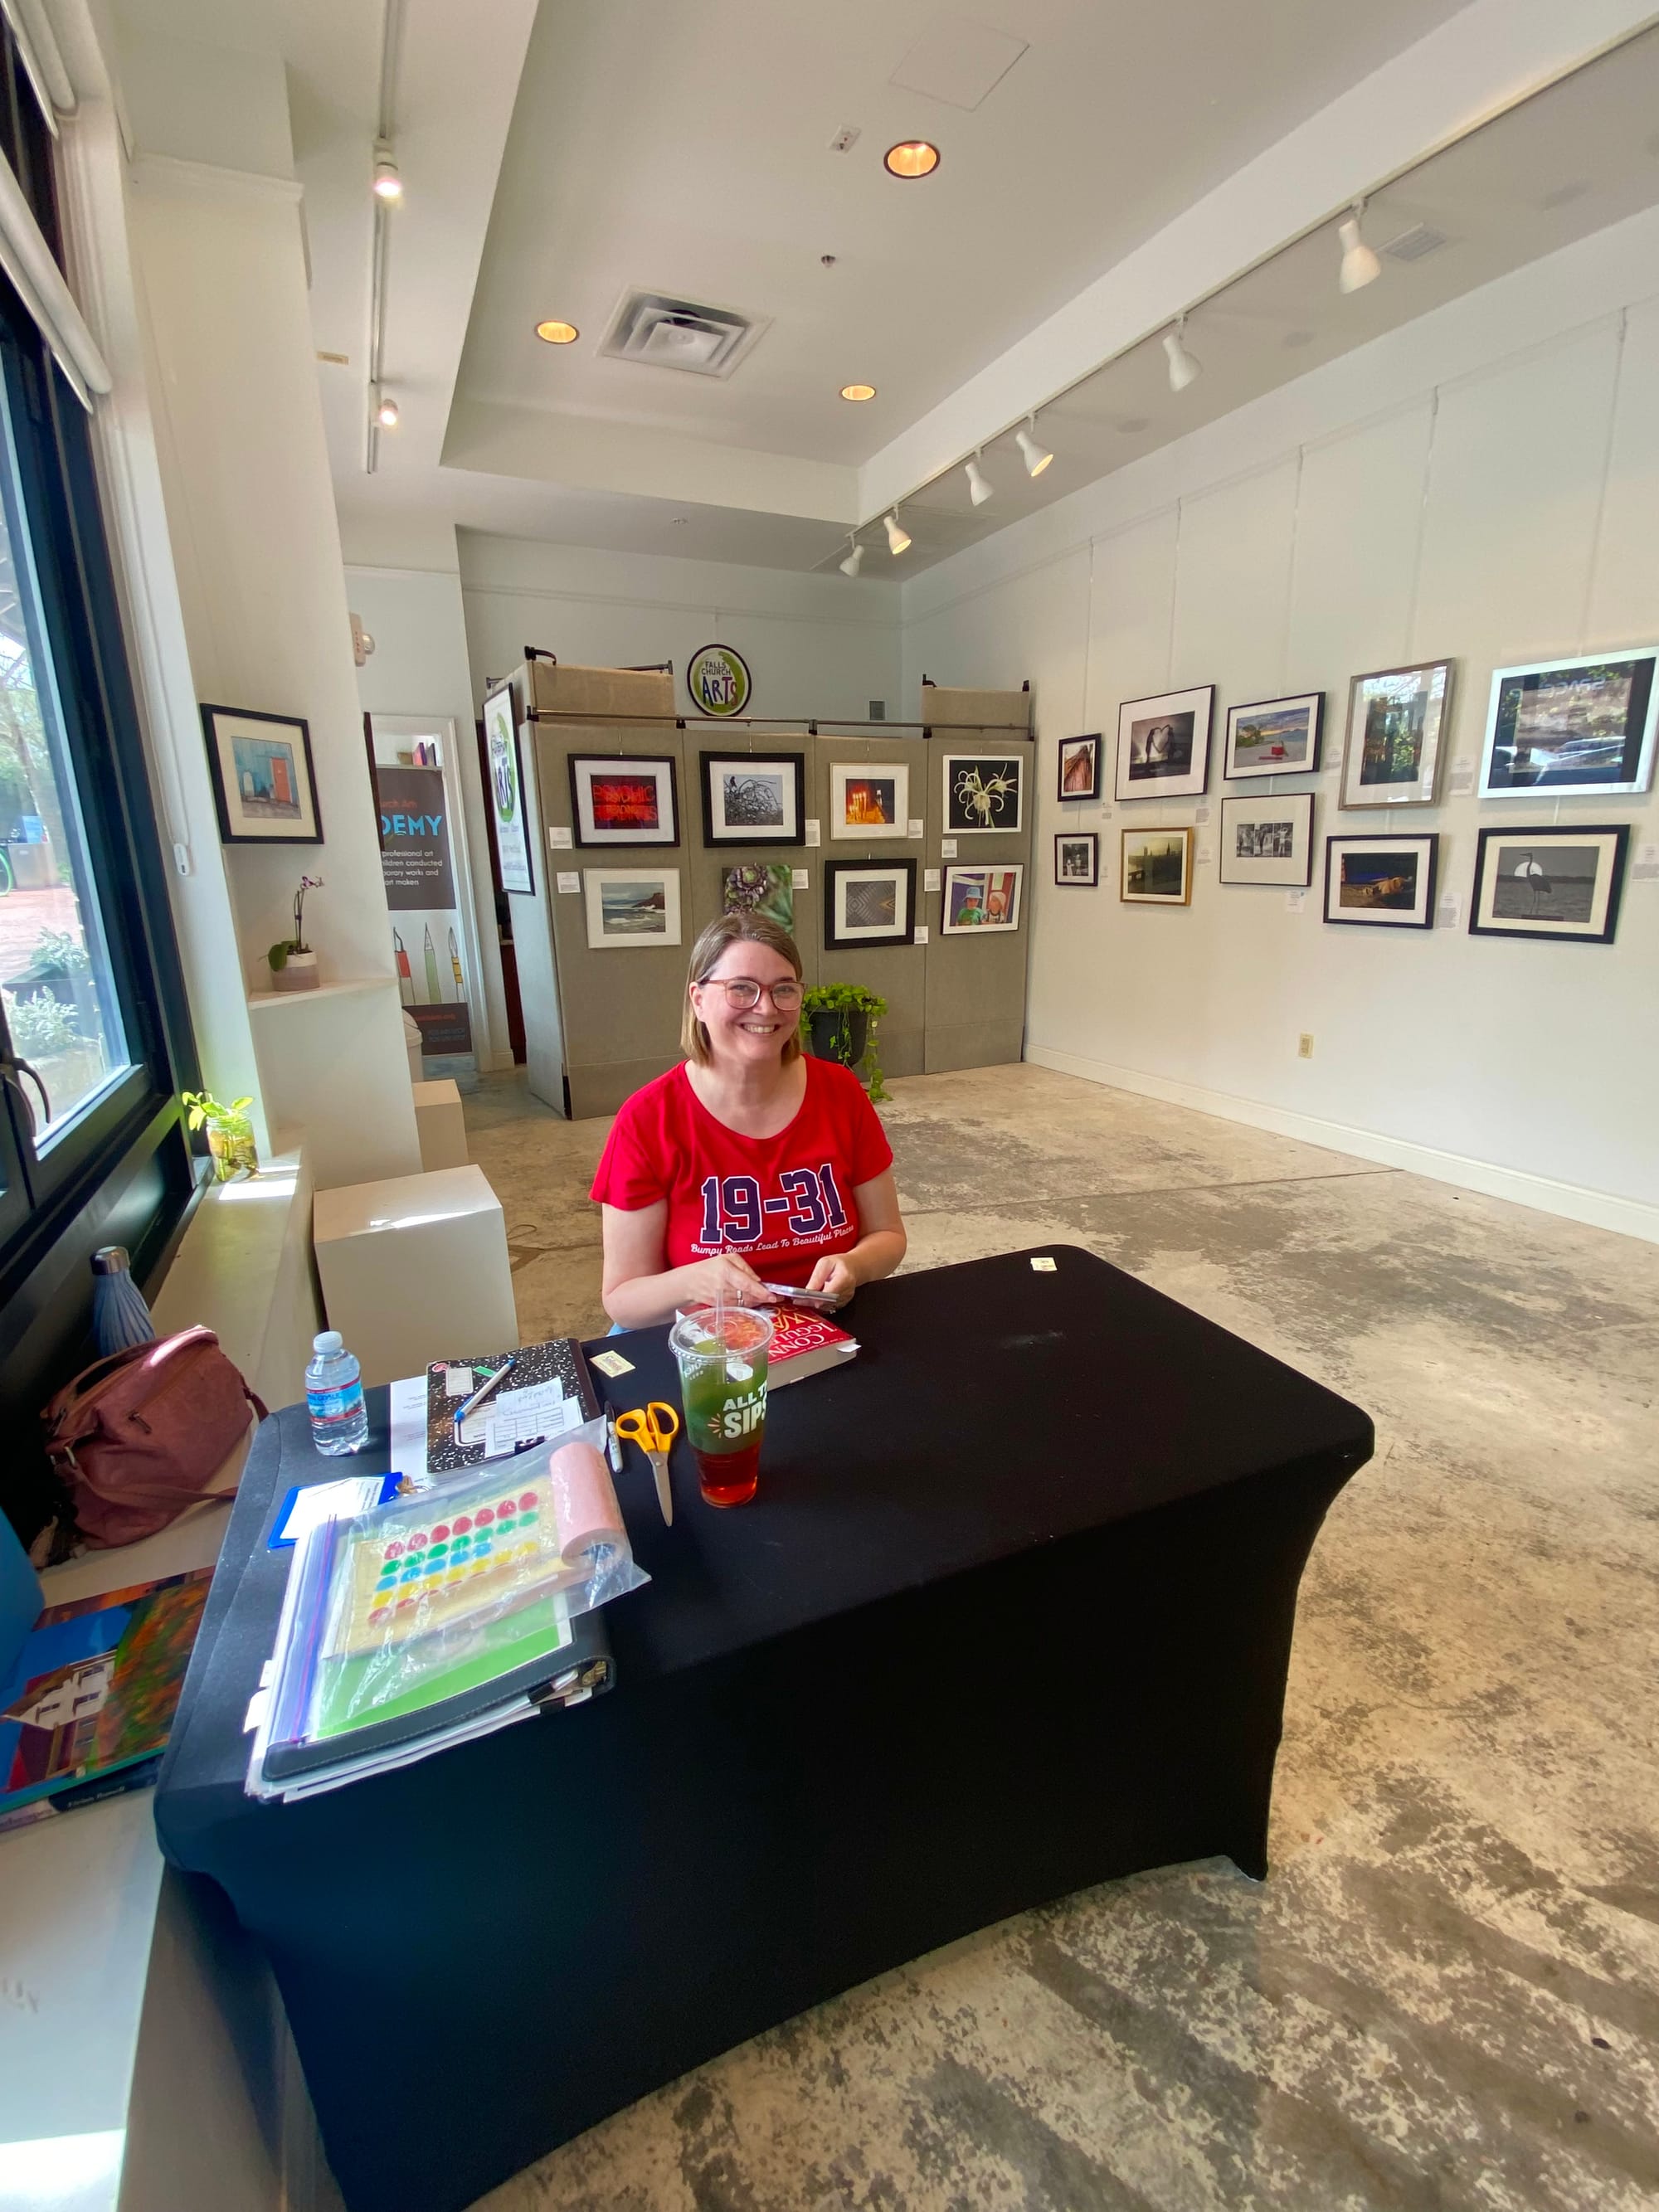 Falls Church Arts: Cultural Hub at the Center of the City